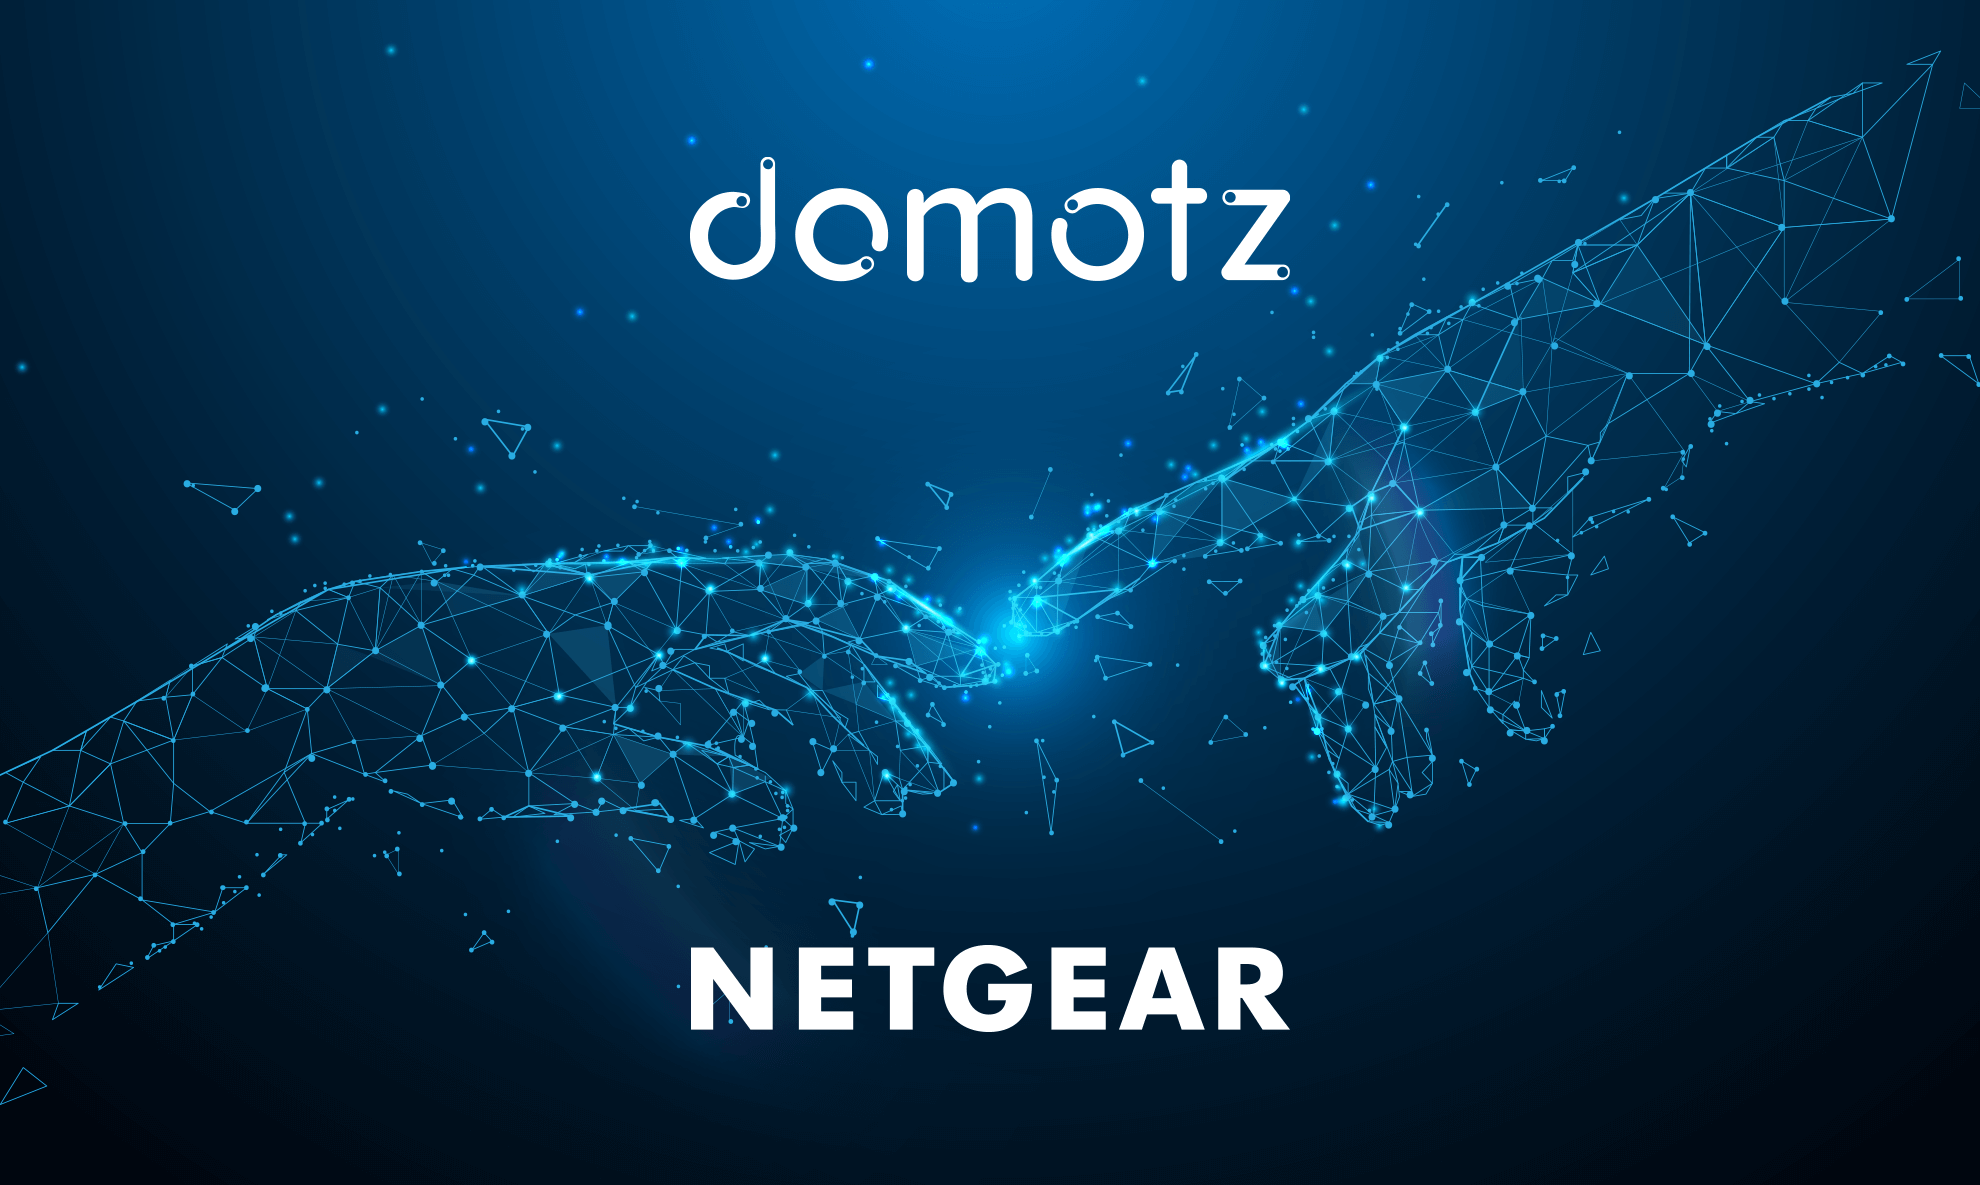 NETGEAR integration with Domotz